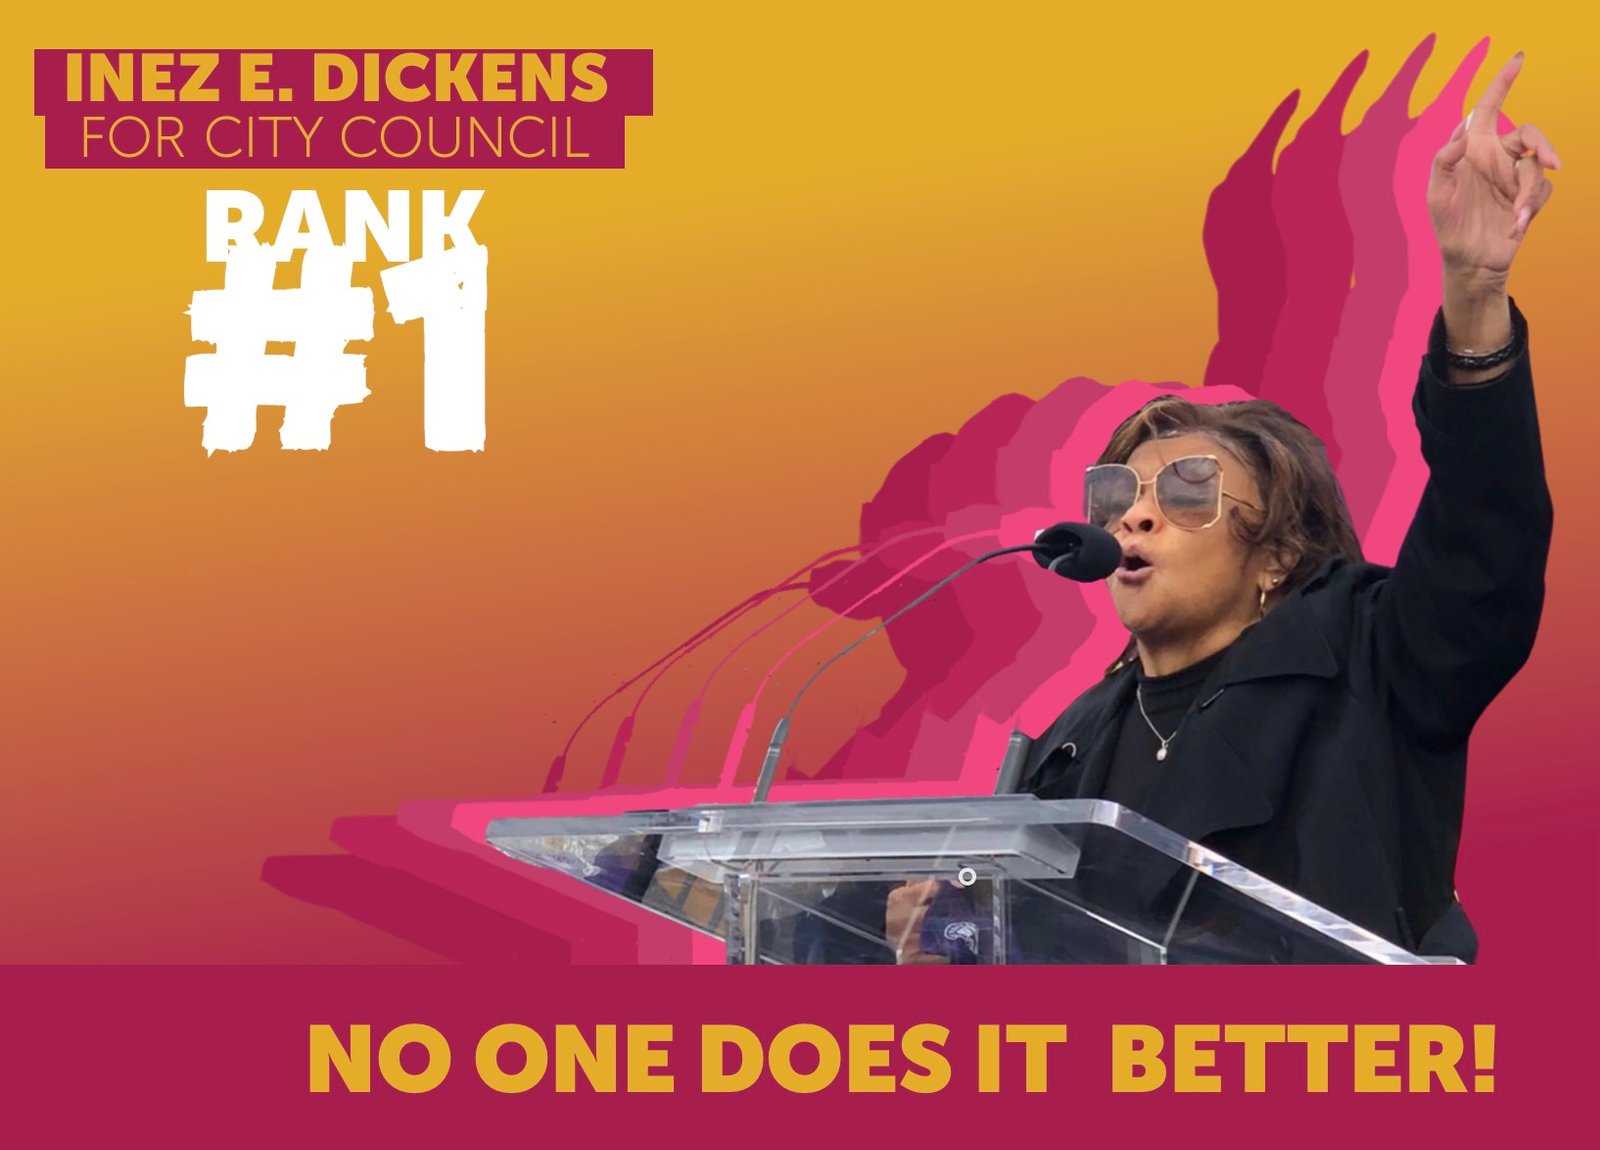 Congress Member Espaillat Endorses Inez Dickens